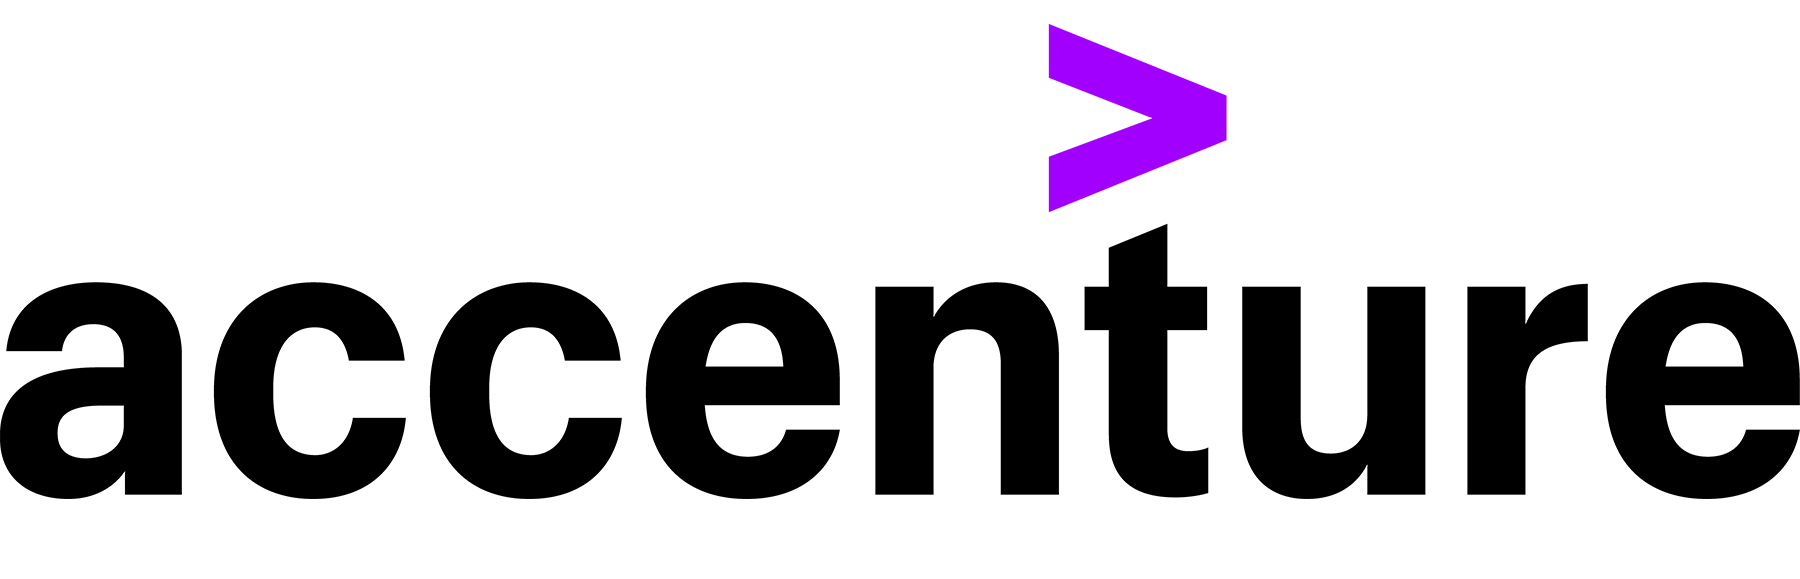 Logotipo Accenture